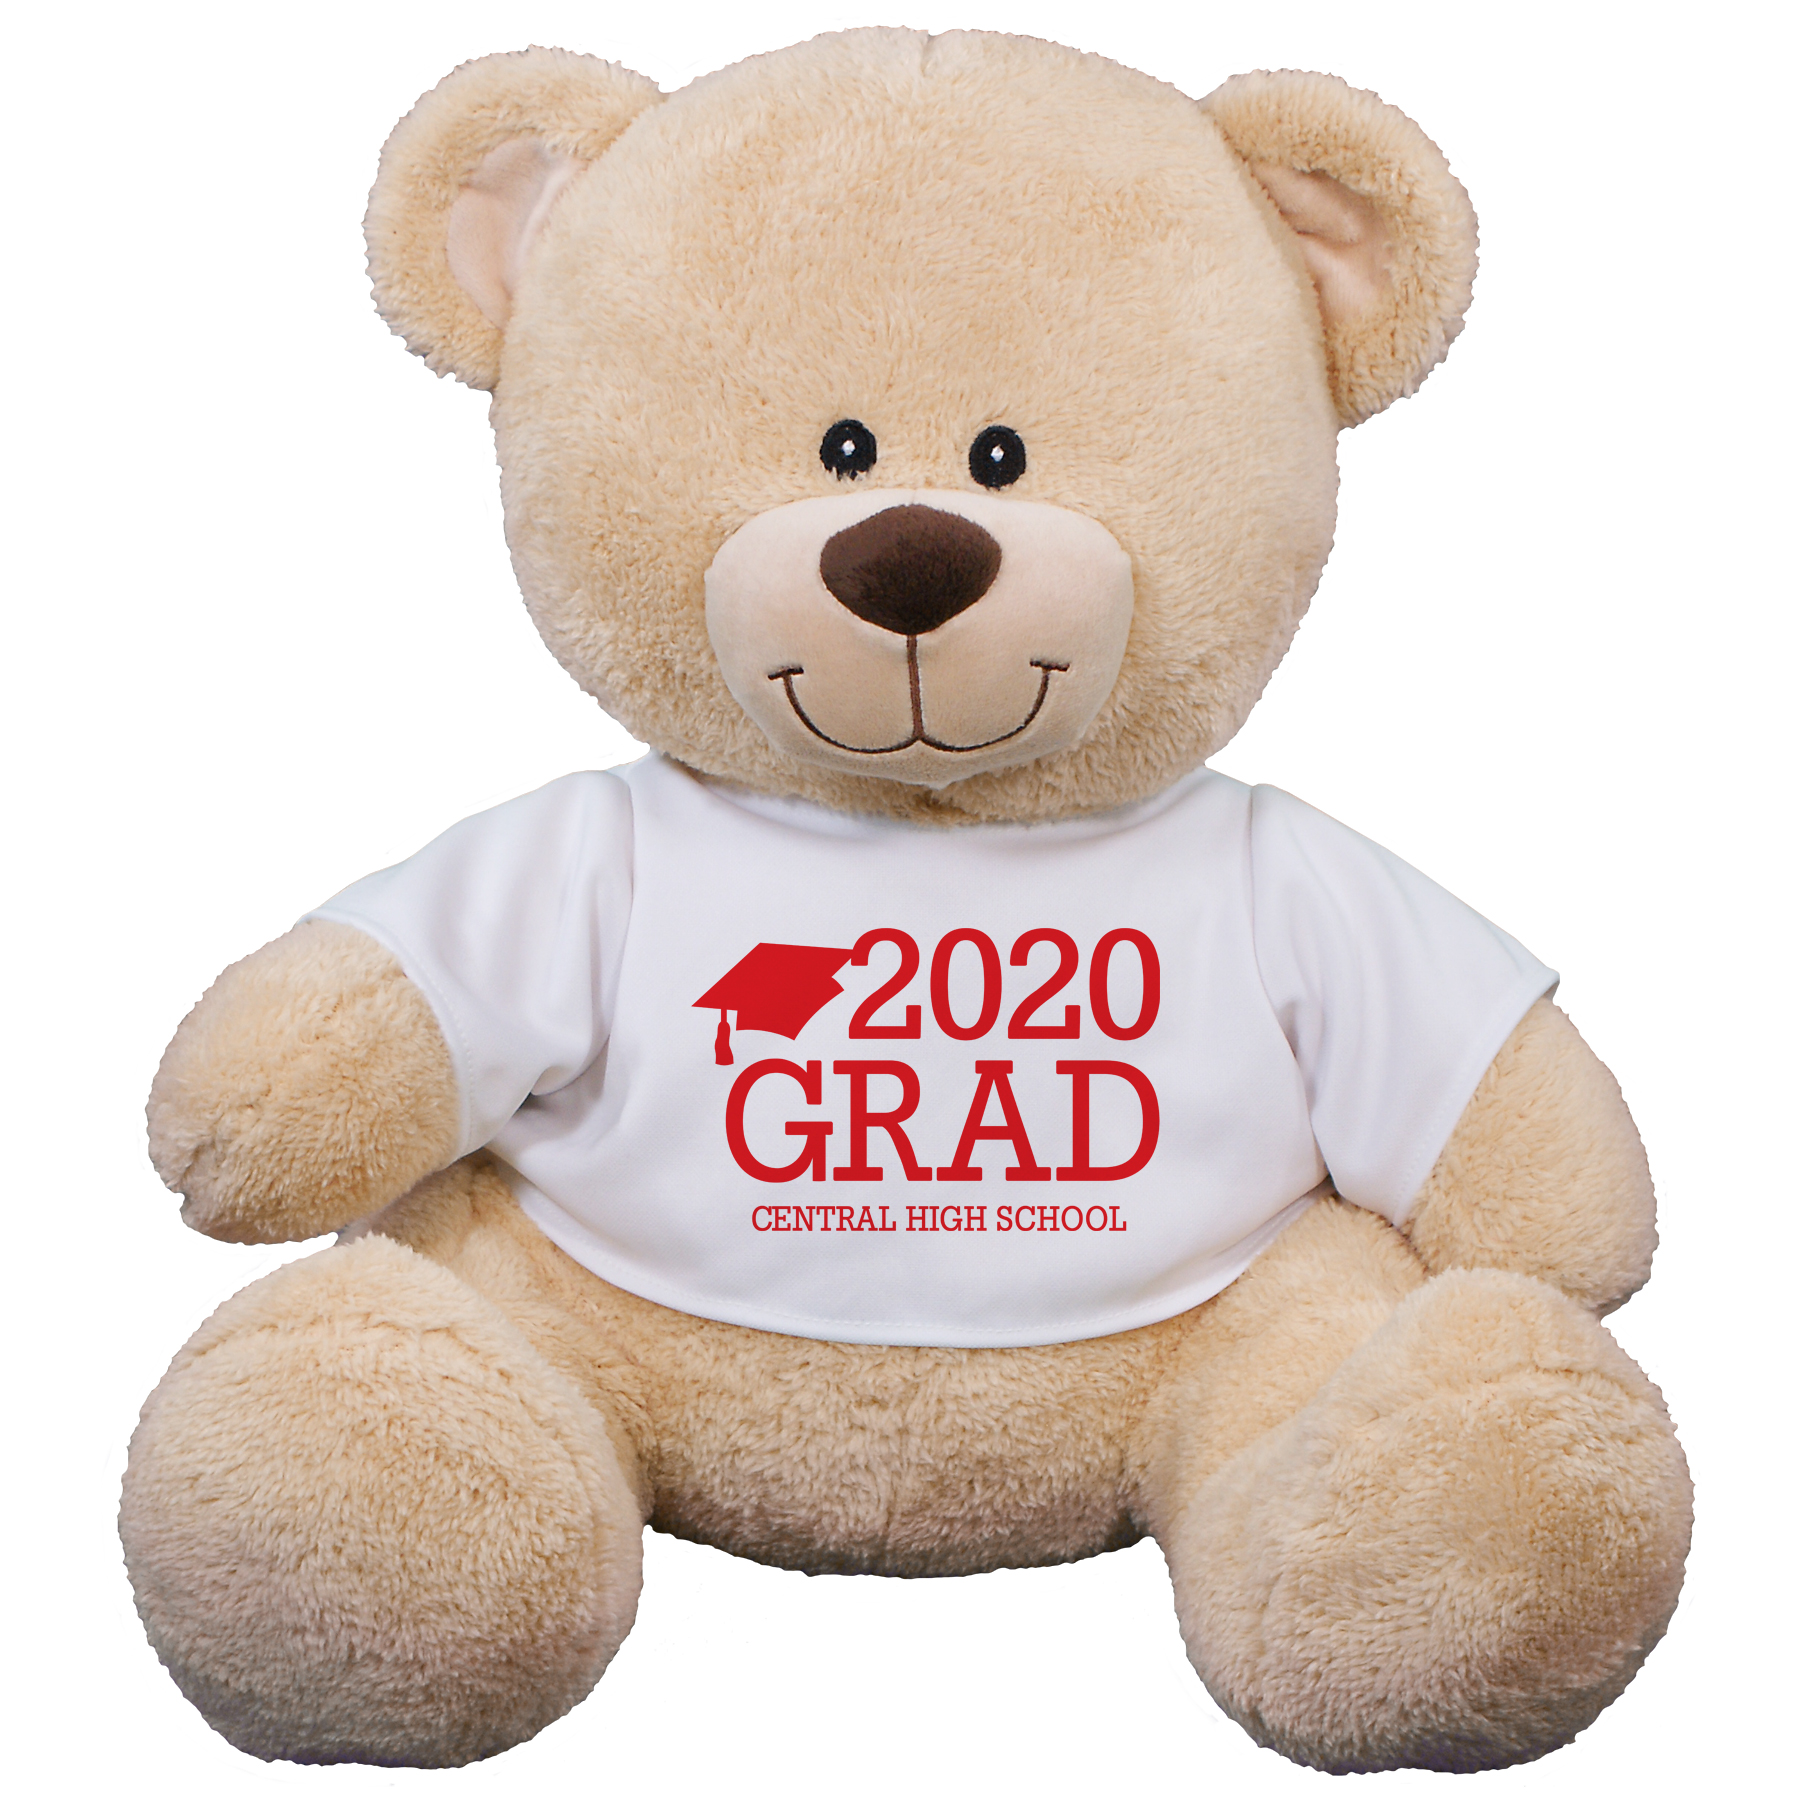 Grad Teddy Bear. 